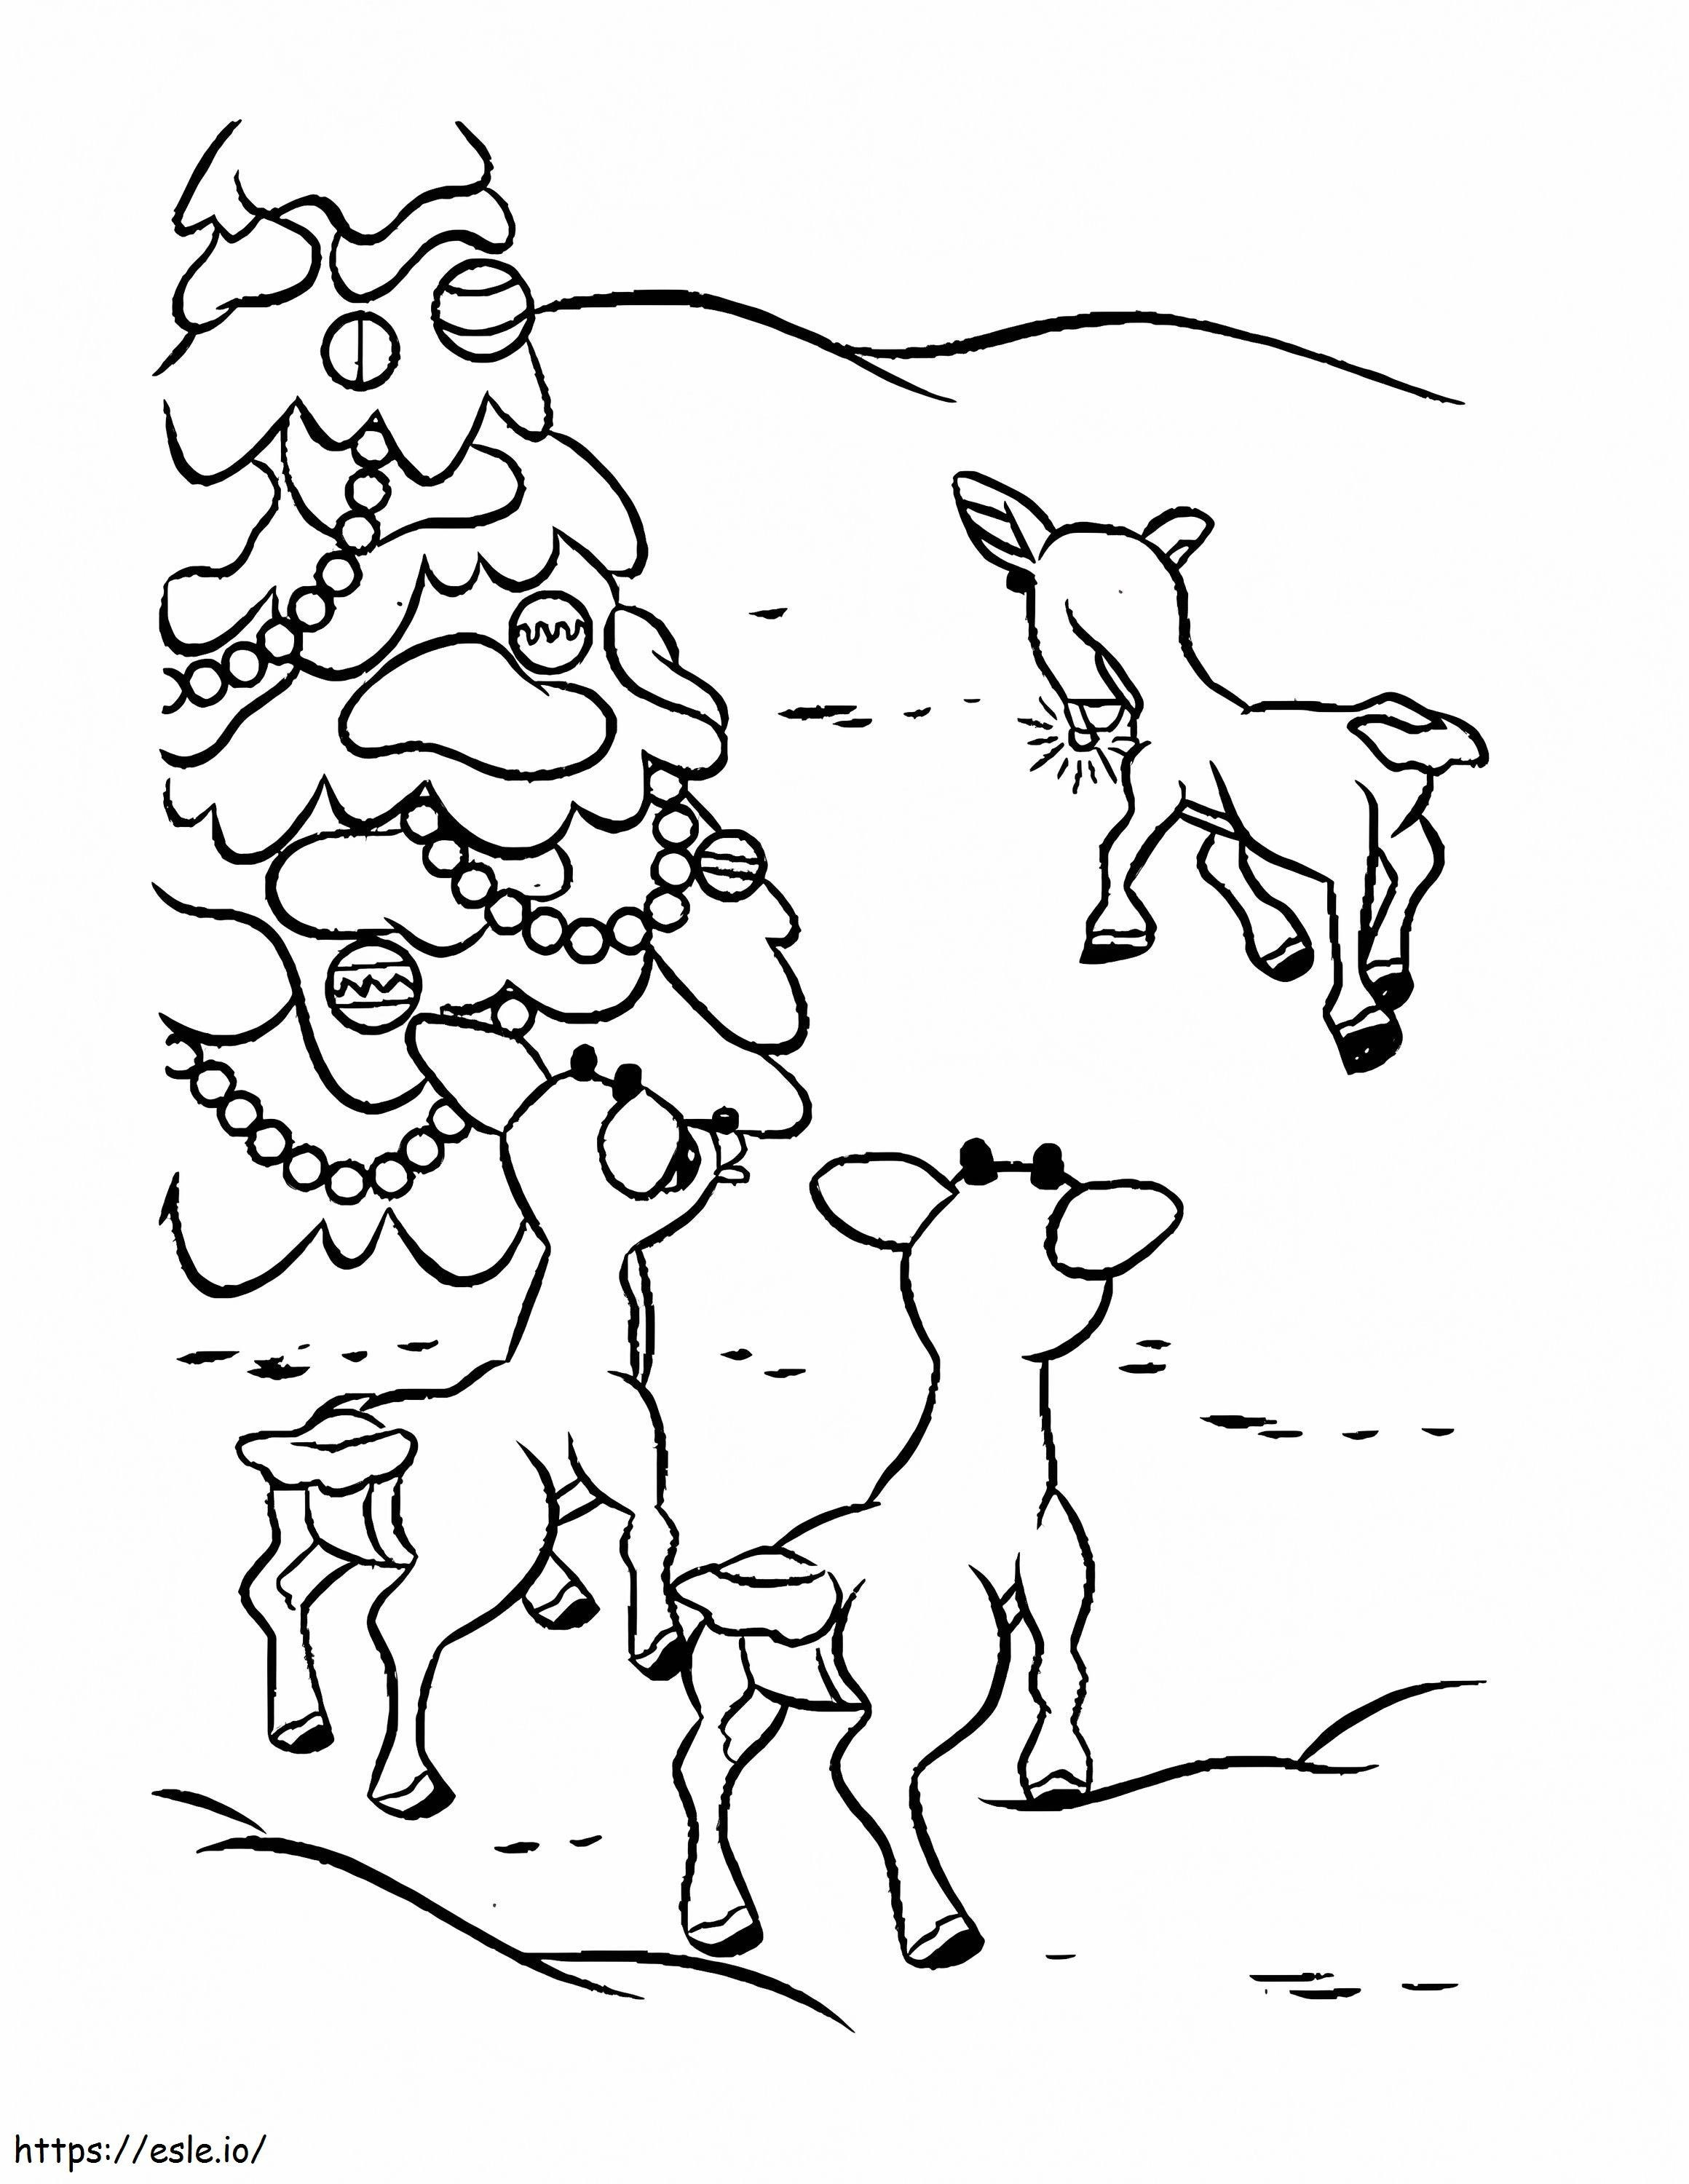 Sad Rudolph coloring page